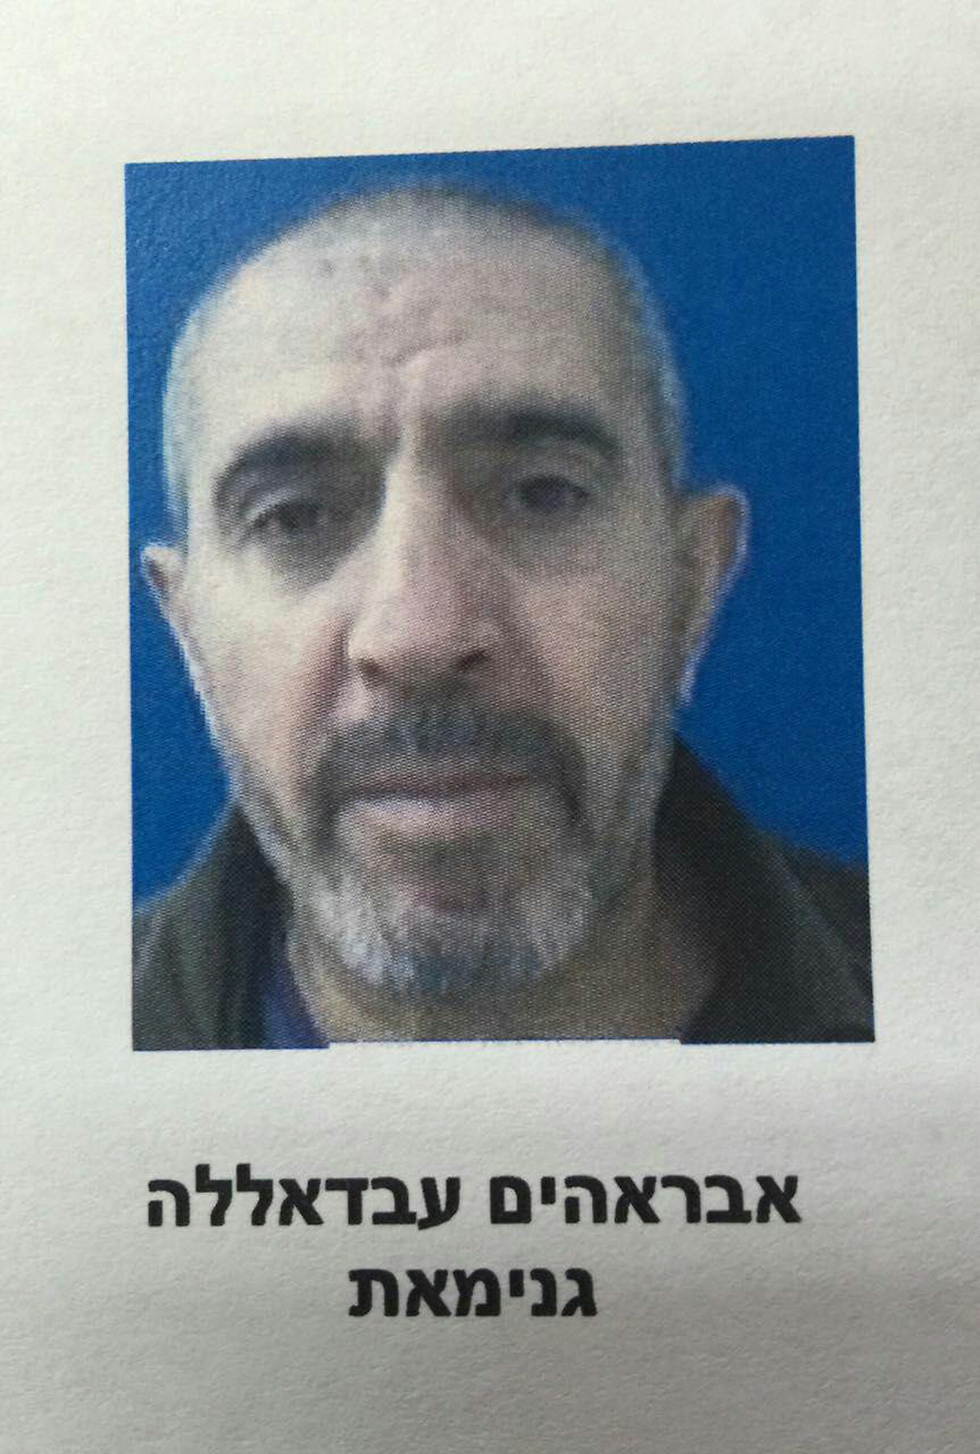 Ibrahim Abdullah Ranimat (Photo: IDF Spokesperson's Unit)